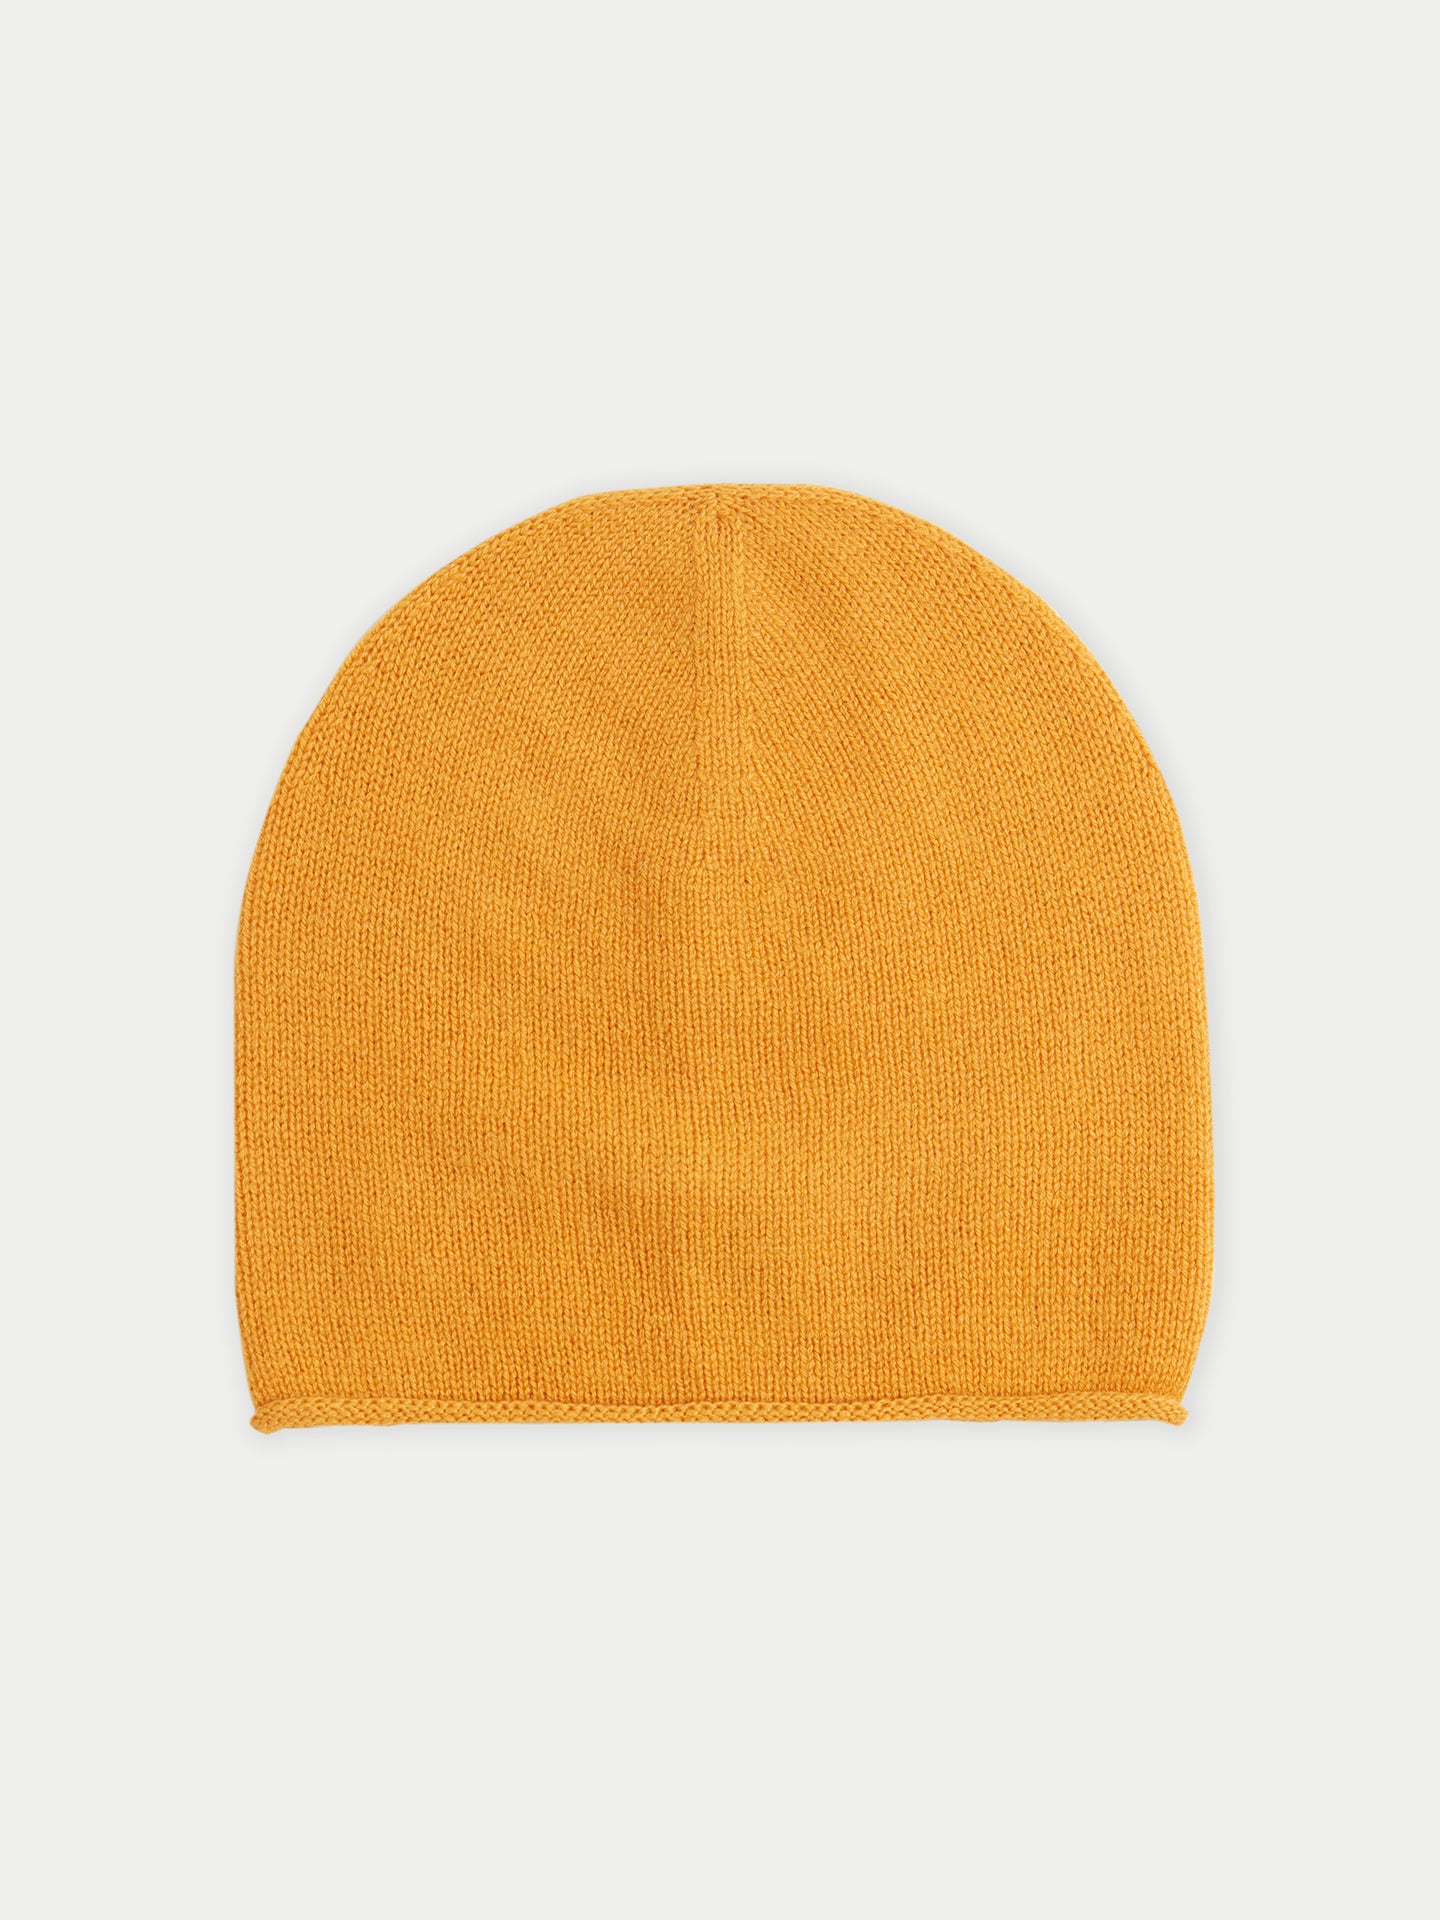 Women's Cashmere $99 Hat & Sweater Daffodil - Gobi Cashmere